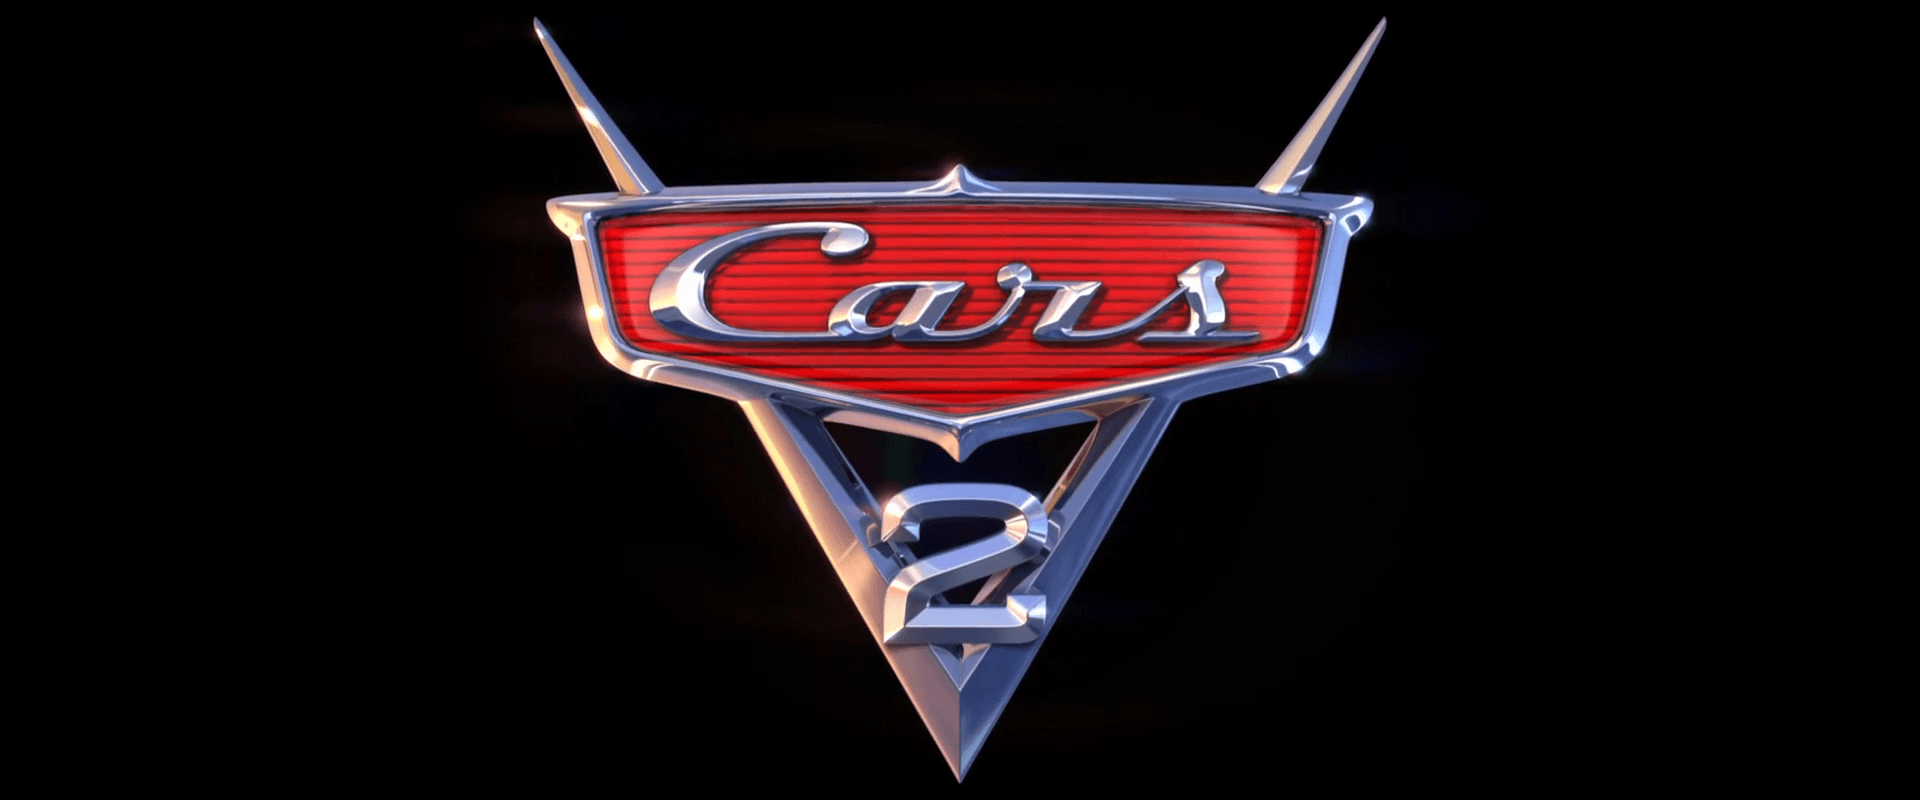 Car Title Logo - Cars 2 logo png » PNG Image